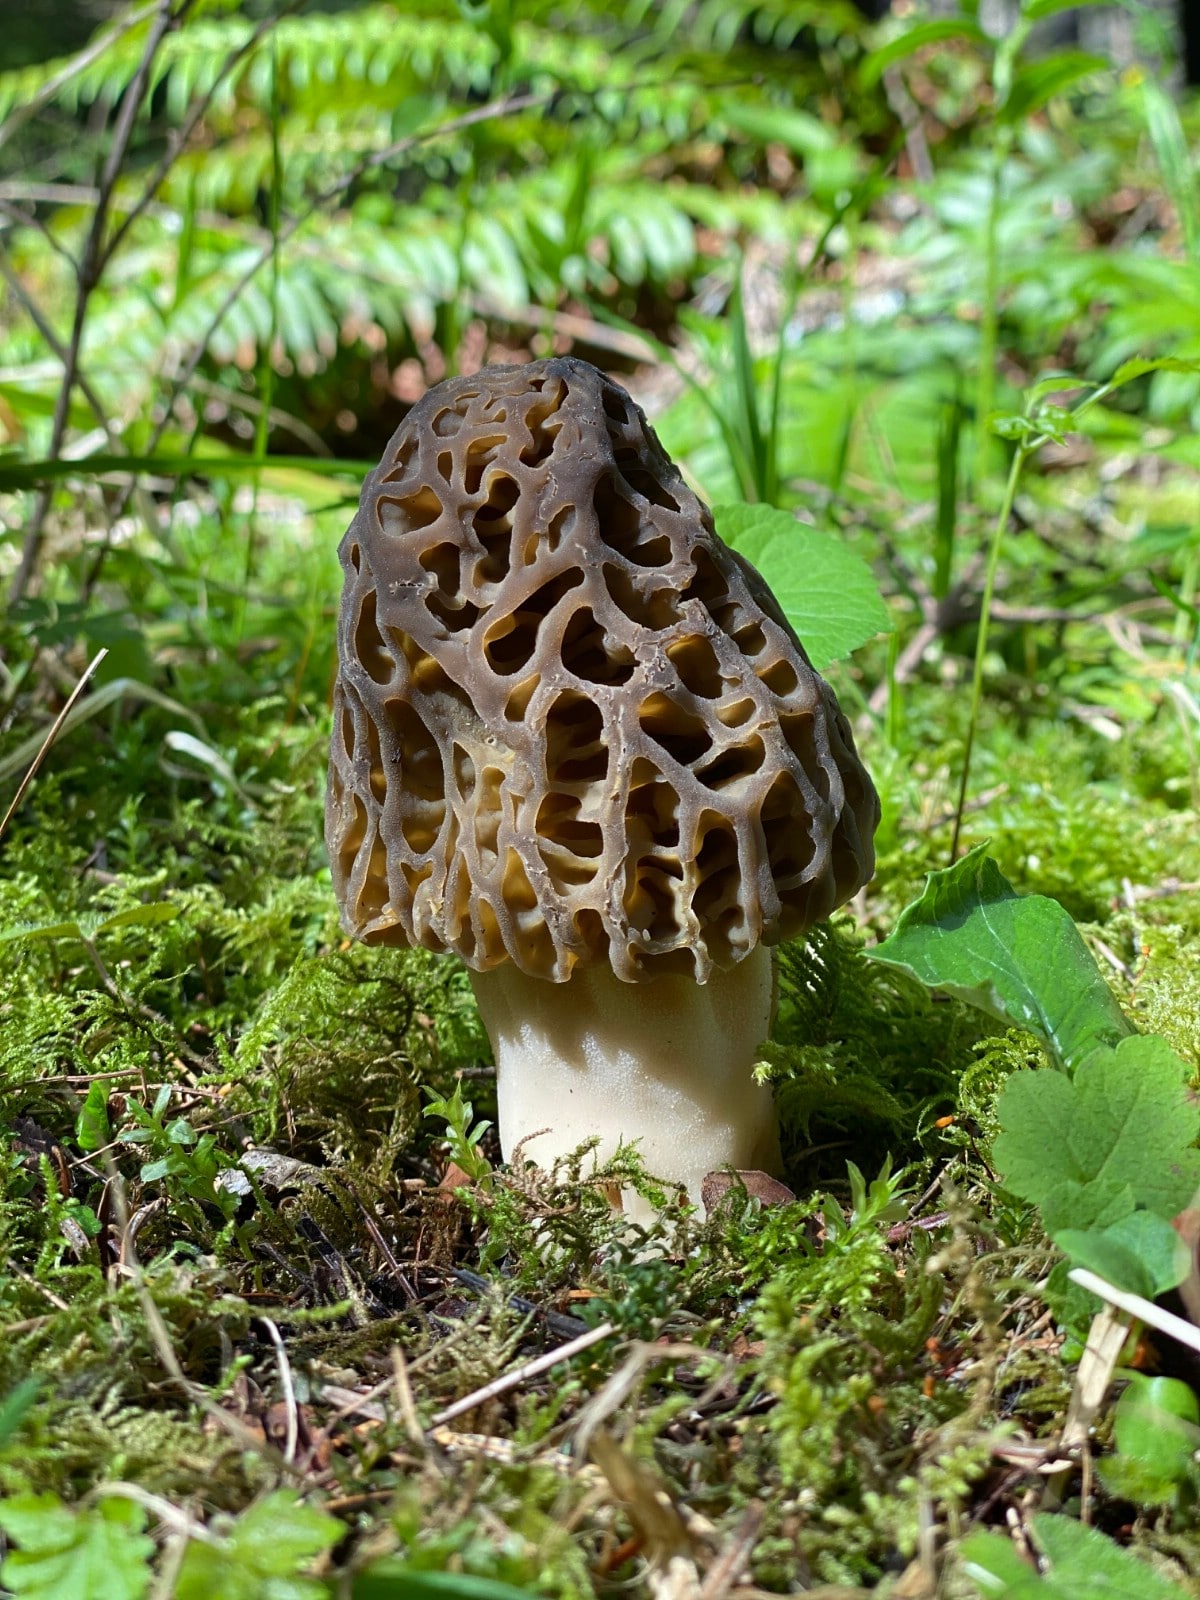 mushroom foraging season for morels starts first thing in spring